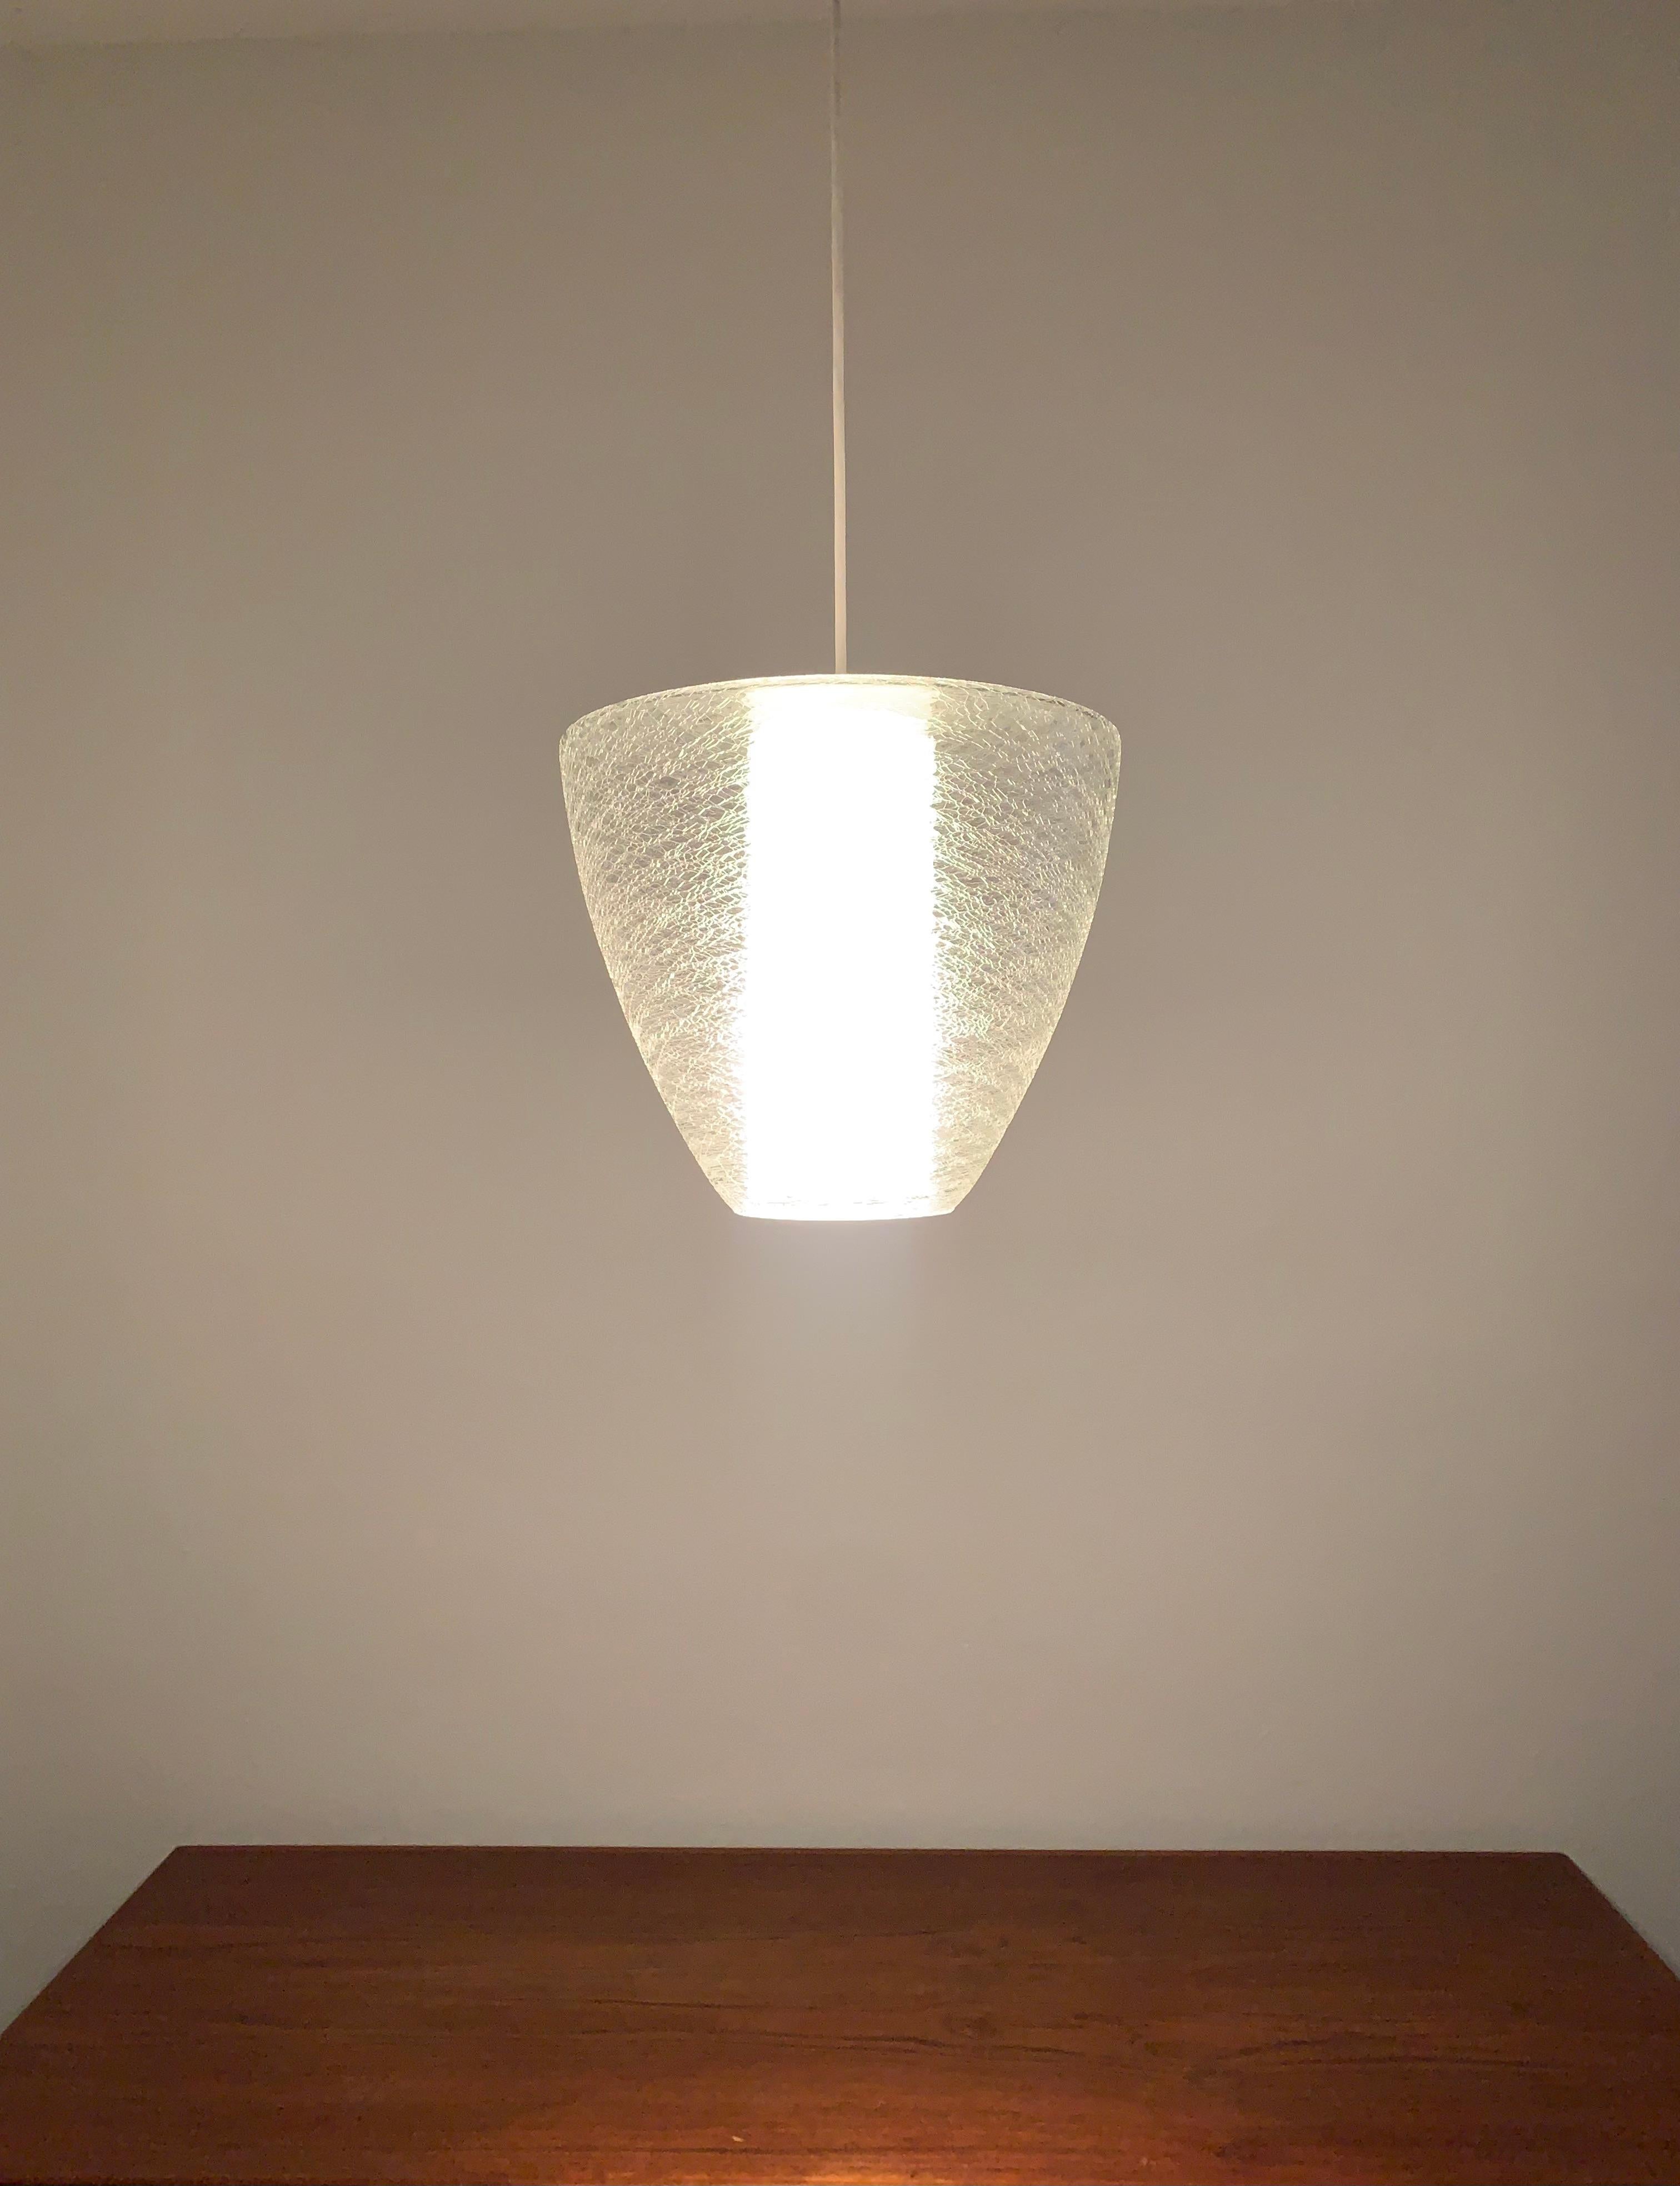 Glass pendant lamp by Doria 2